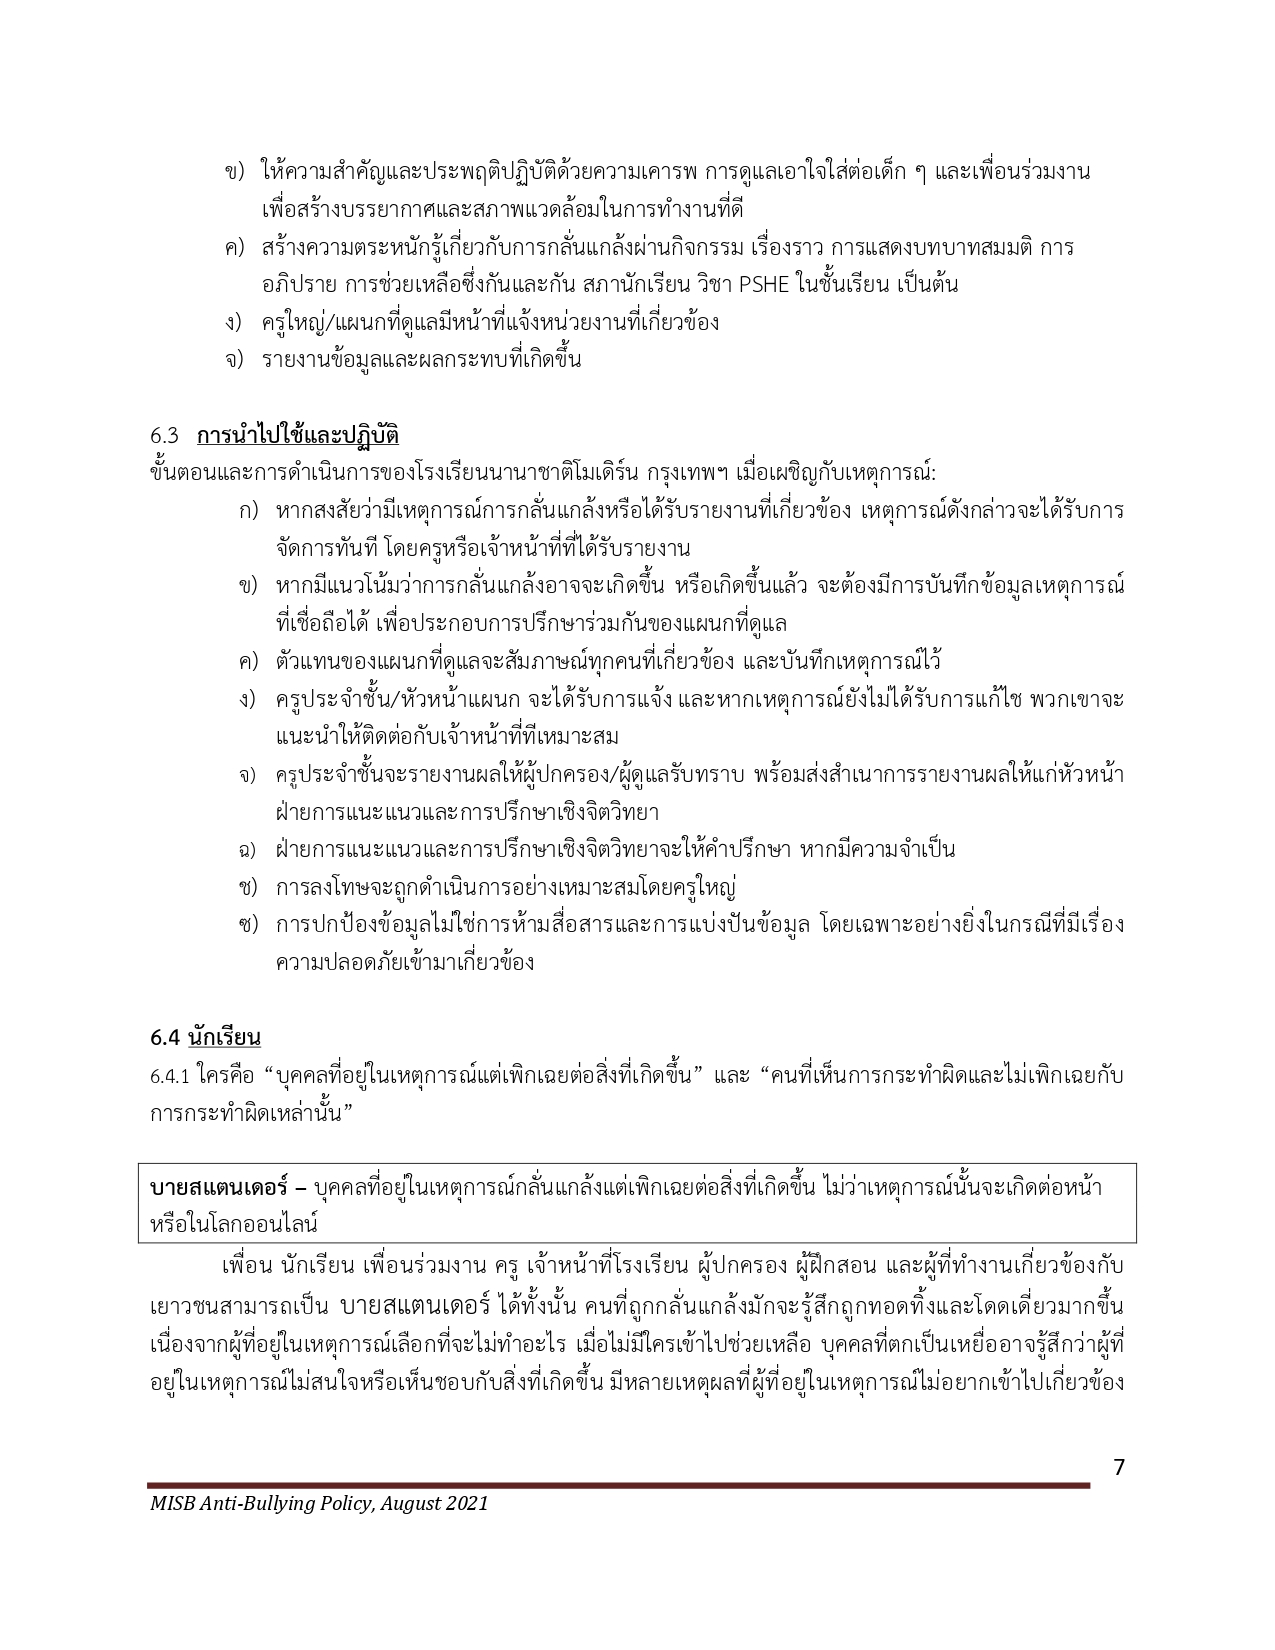 Anti Bullying Policy 2021 2023 Thai Language page 0009